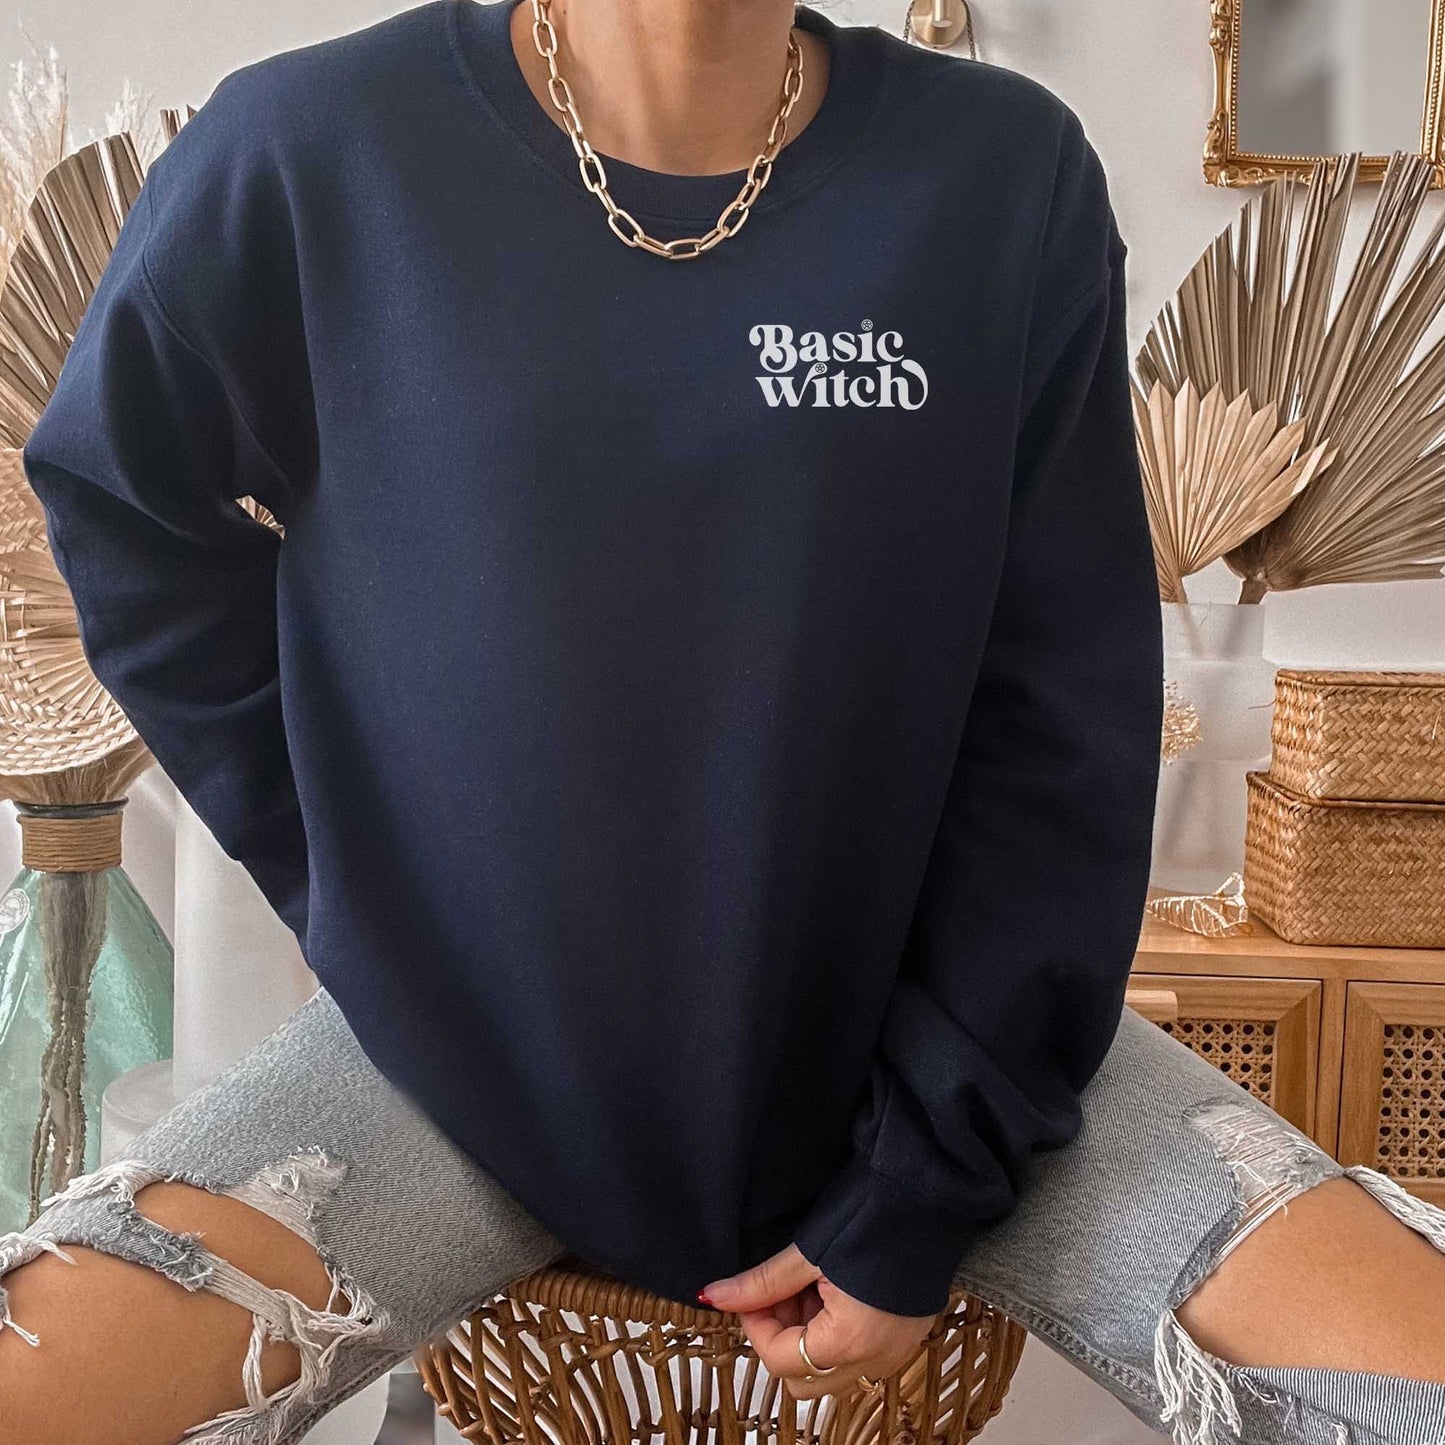 Basic Witch Sweatshirt | Unisex Long Sleeve Warm Shirt Mens Womens